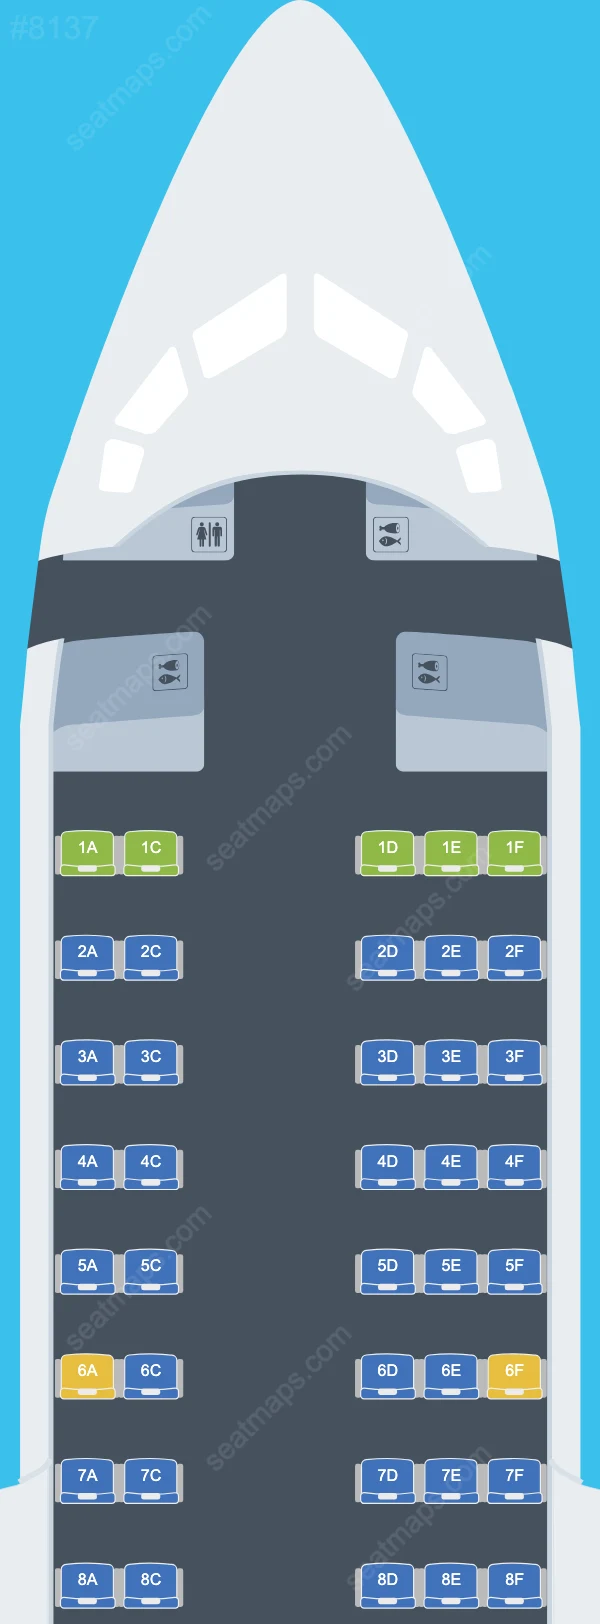 Aerovías DAP Avro RJ100 Avroliner Plan de Salle RJ100